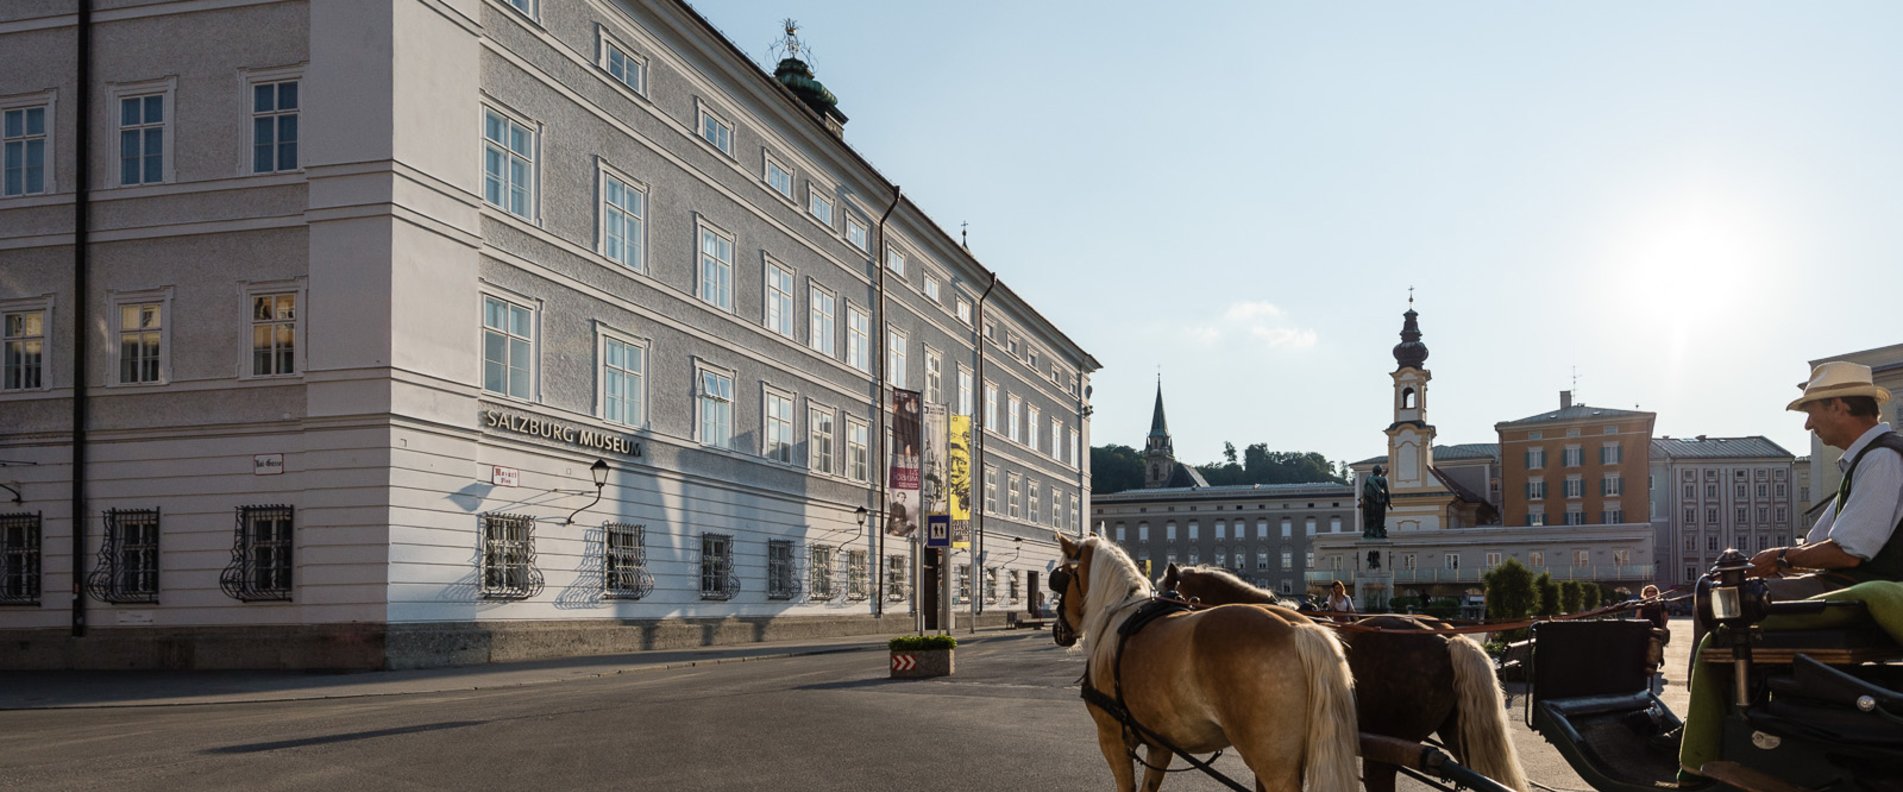 Salzburg Museum | © Bryan Reinhart